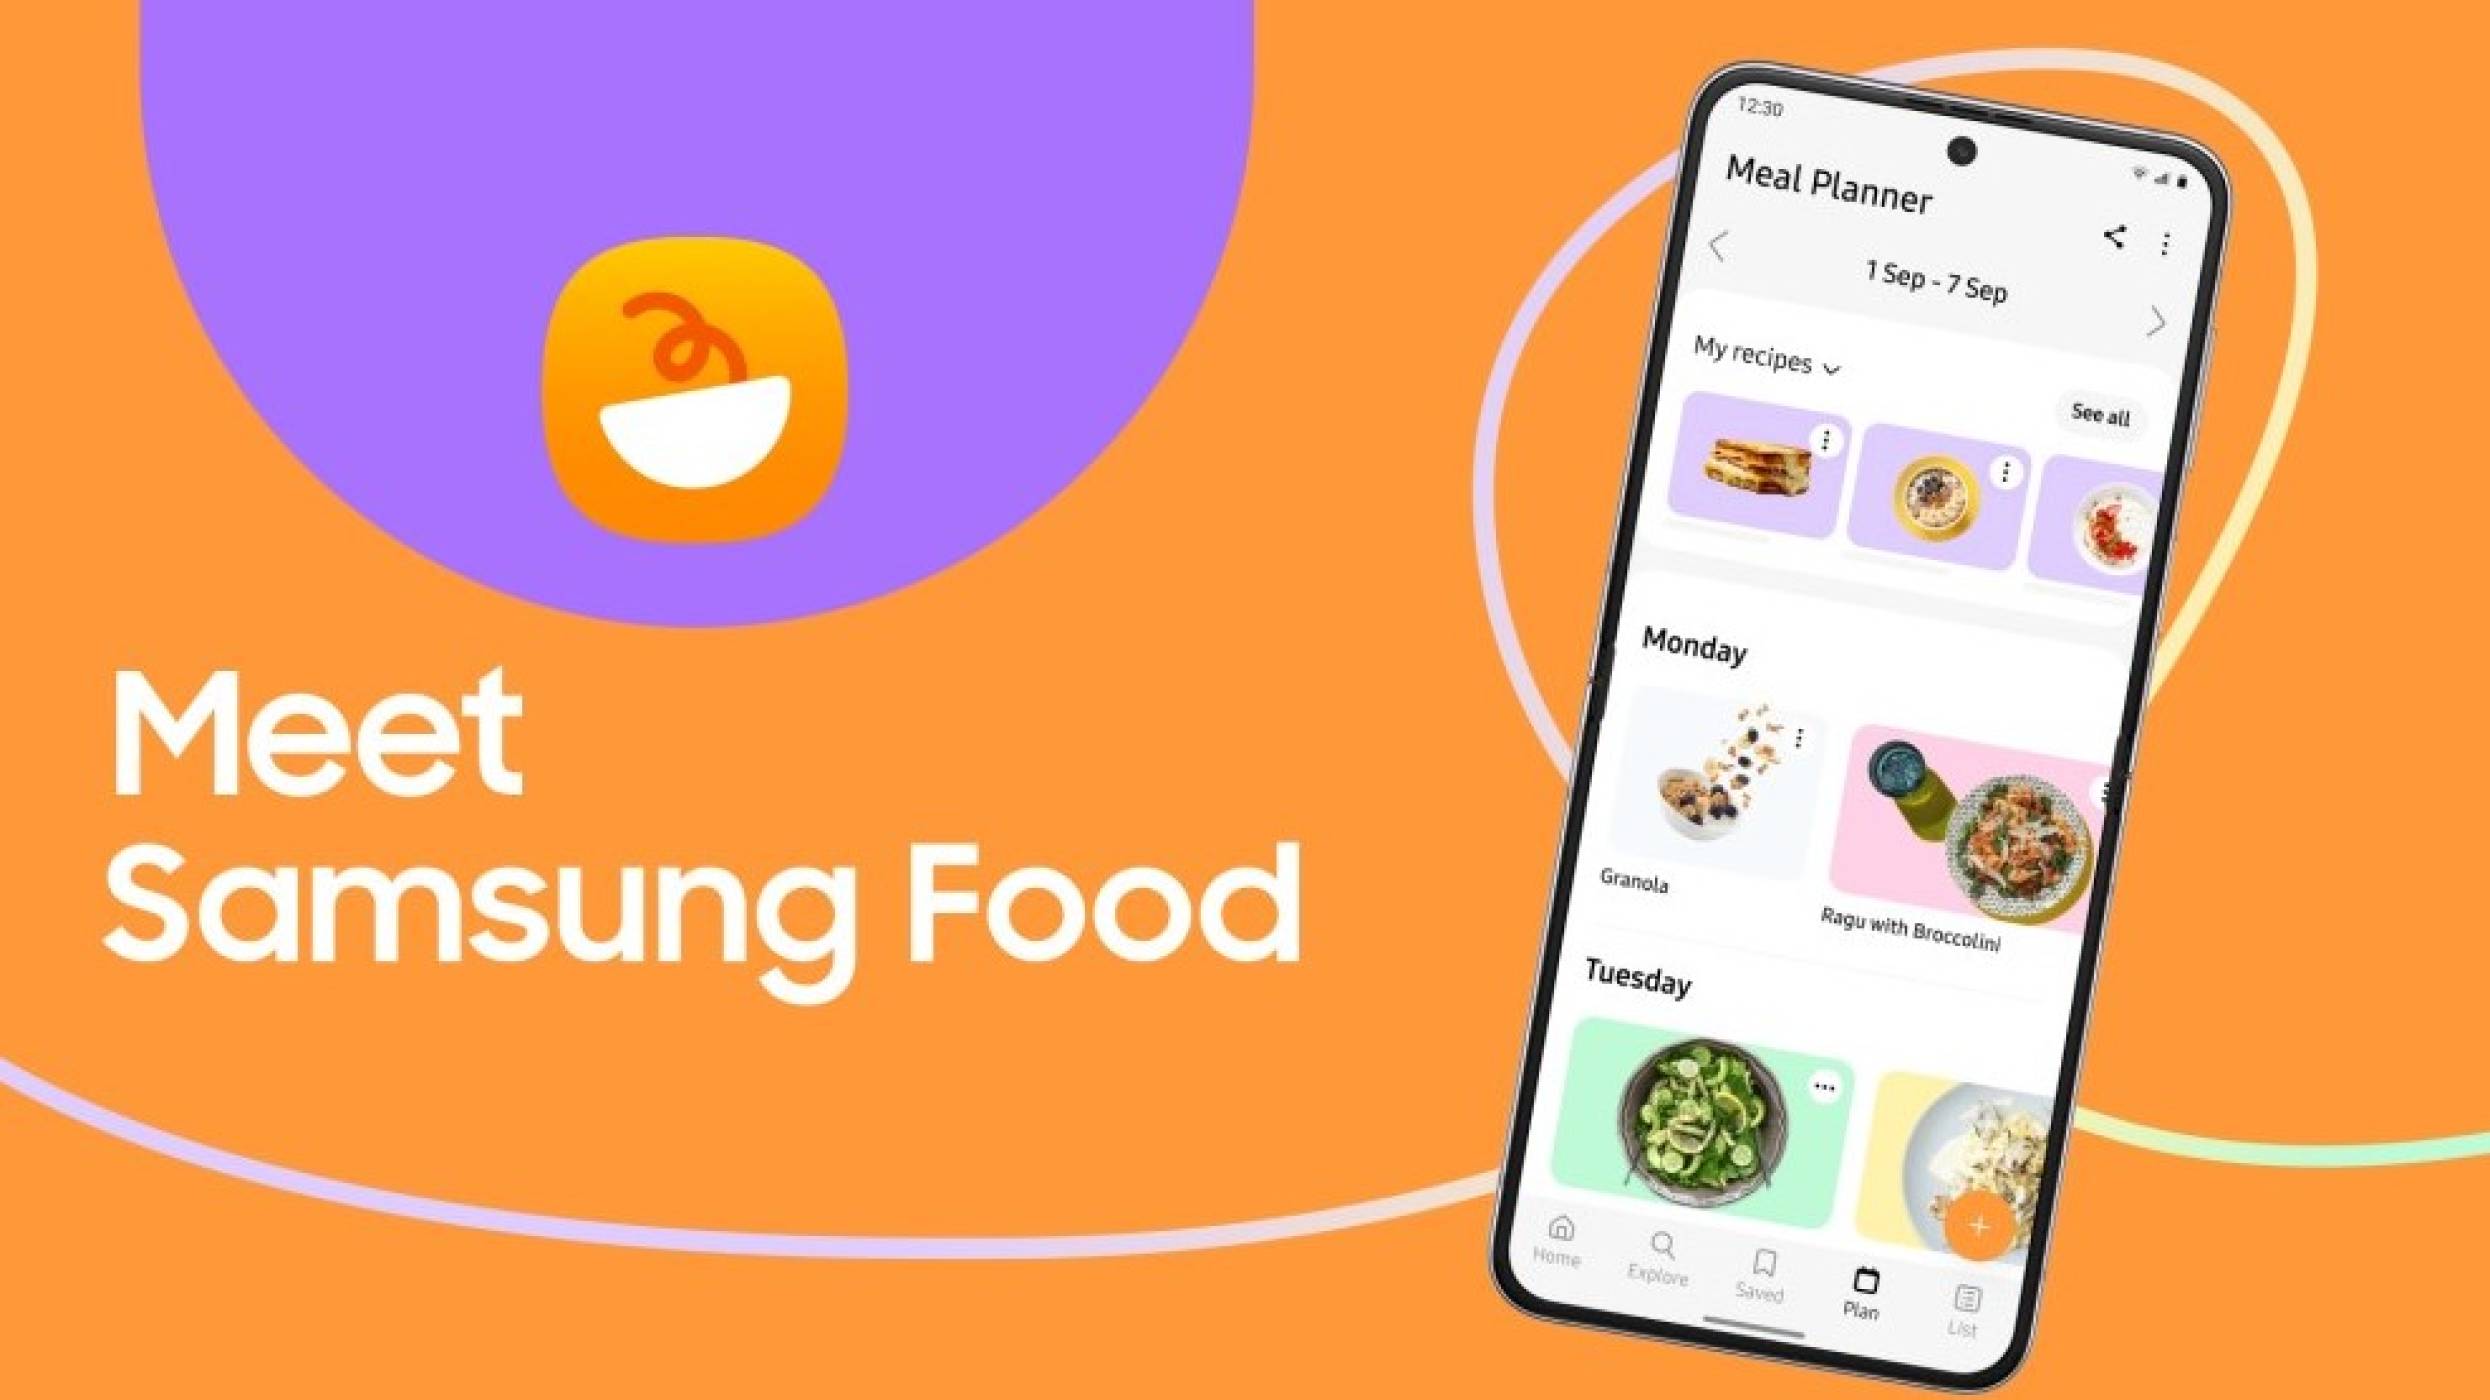 Samsung Food може да ви даде опции за здравословно меню